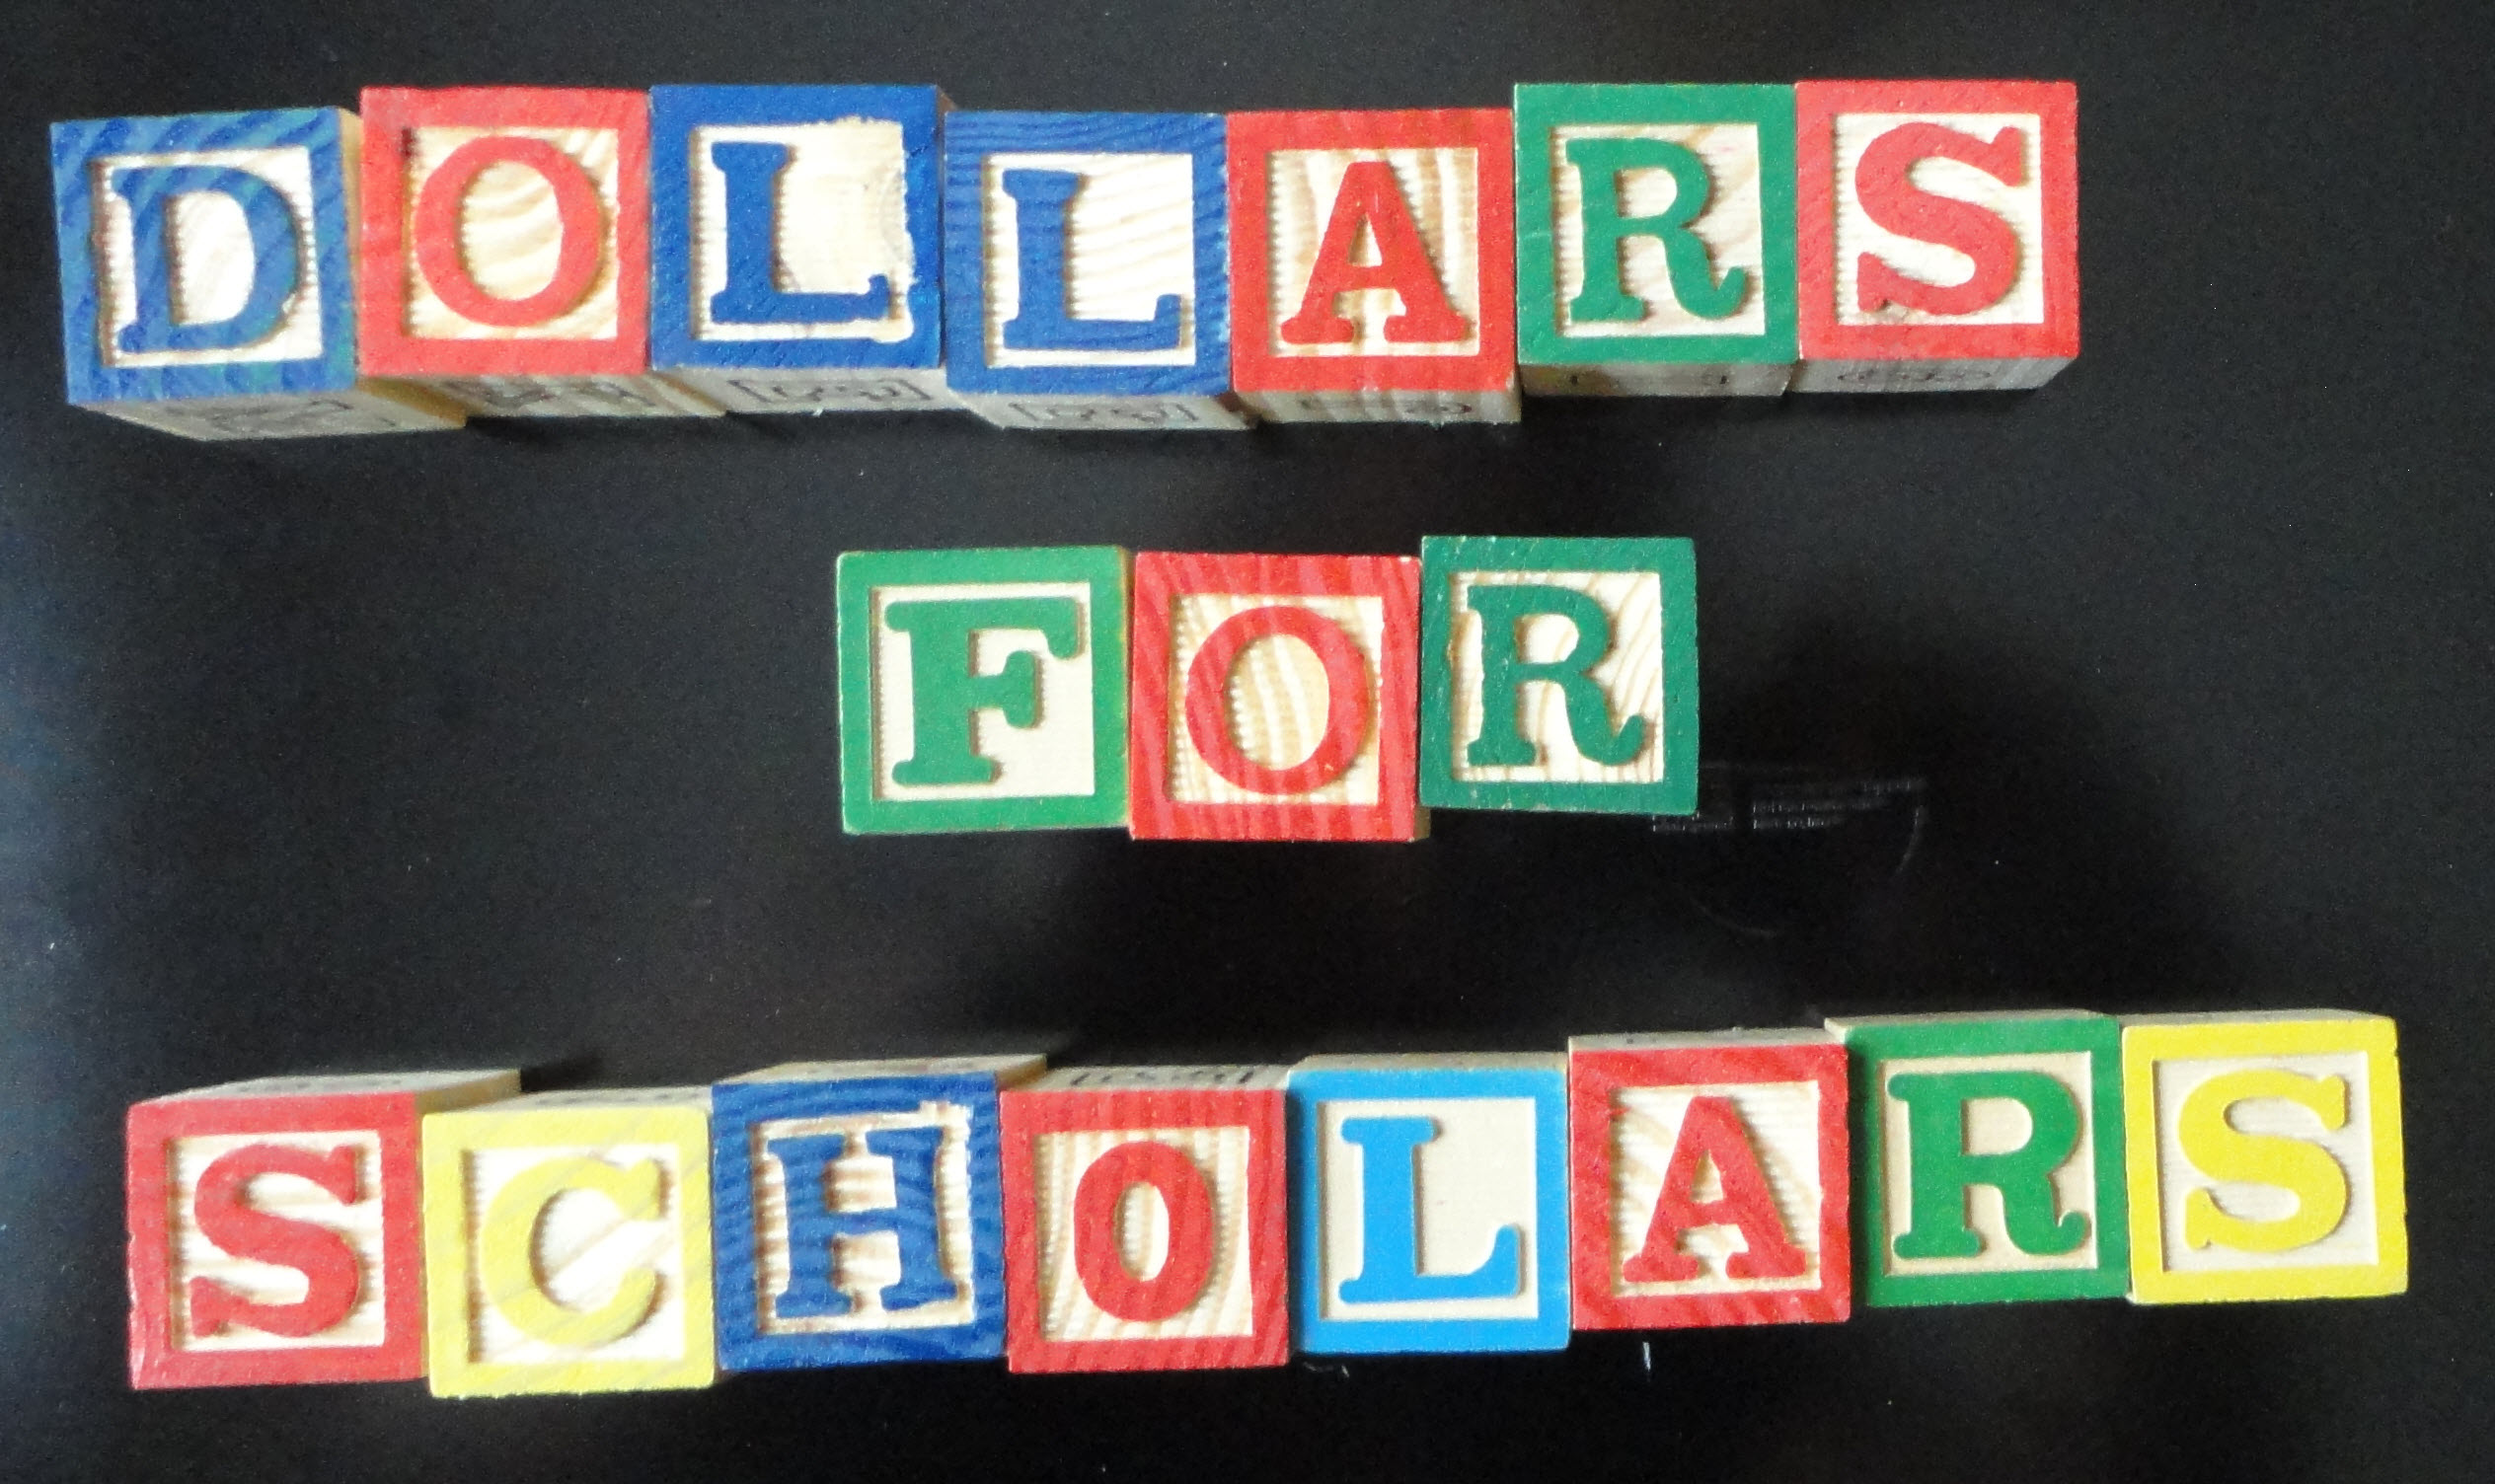 Dollars for Scholars building blocks